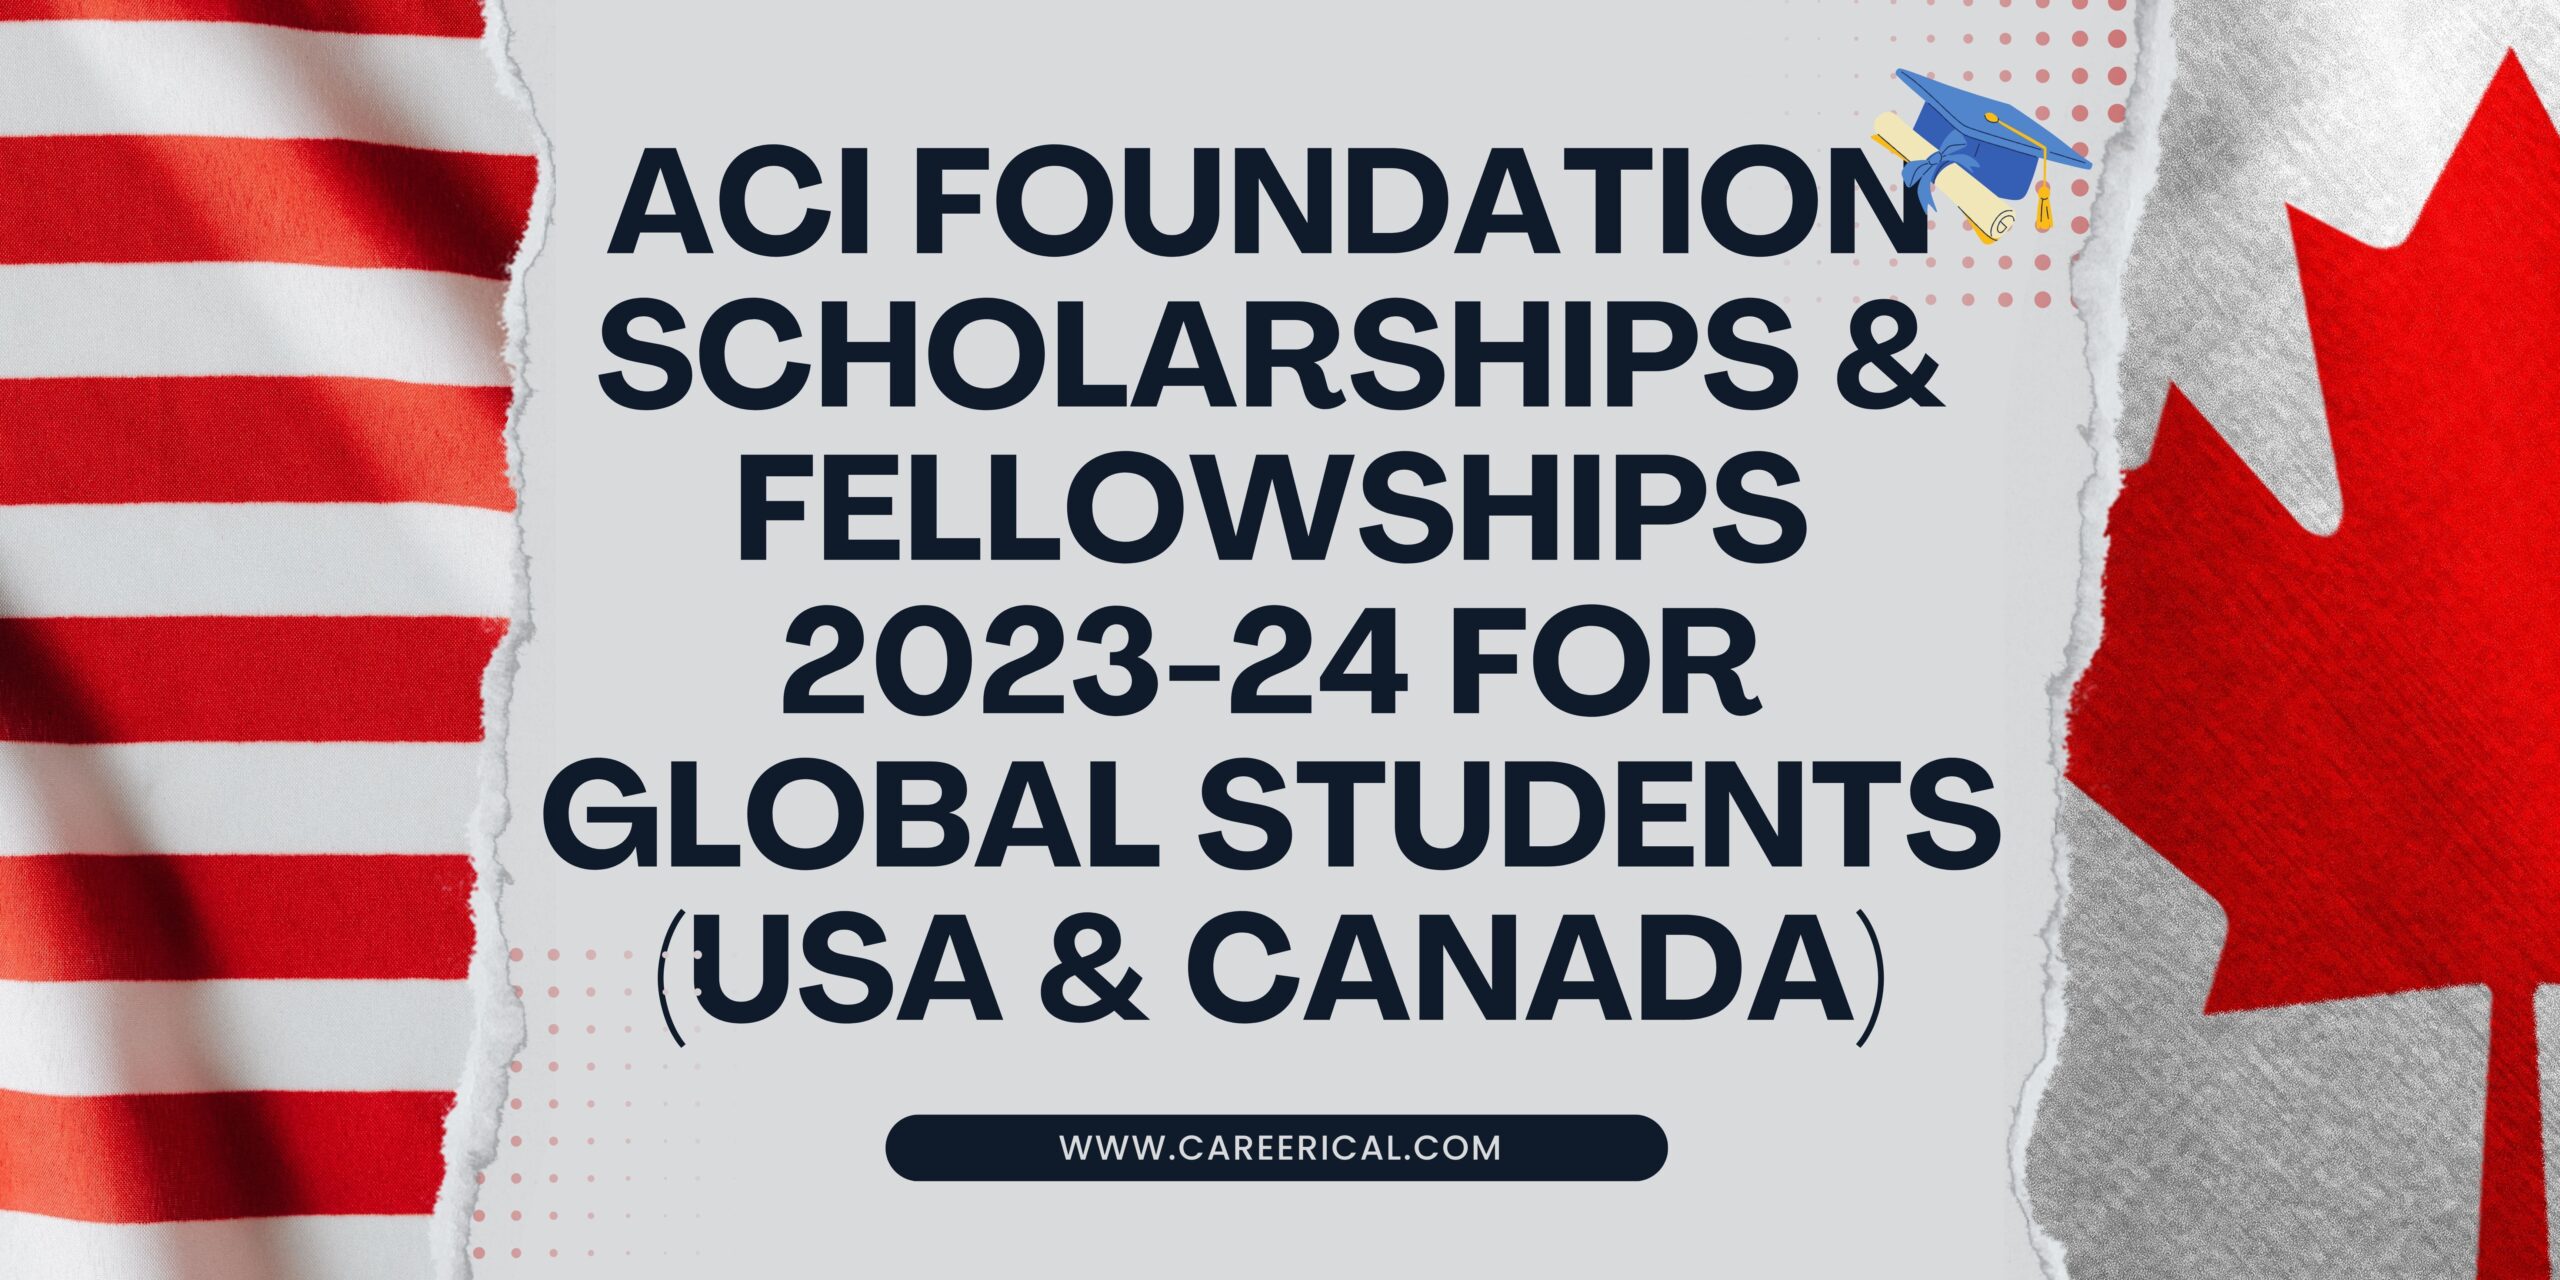 ACI Foundation Scholarships & Fellowships 2023-24 for Global Students (USA & Canada)